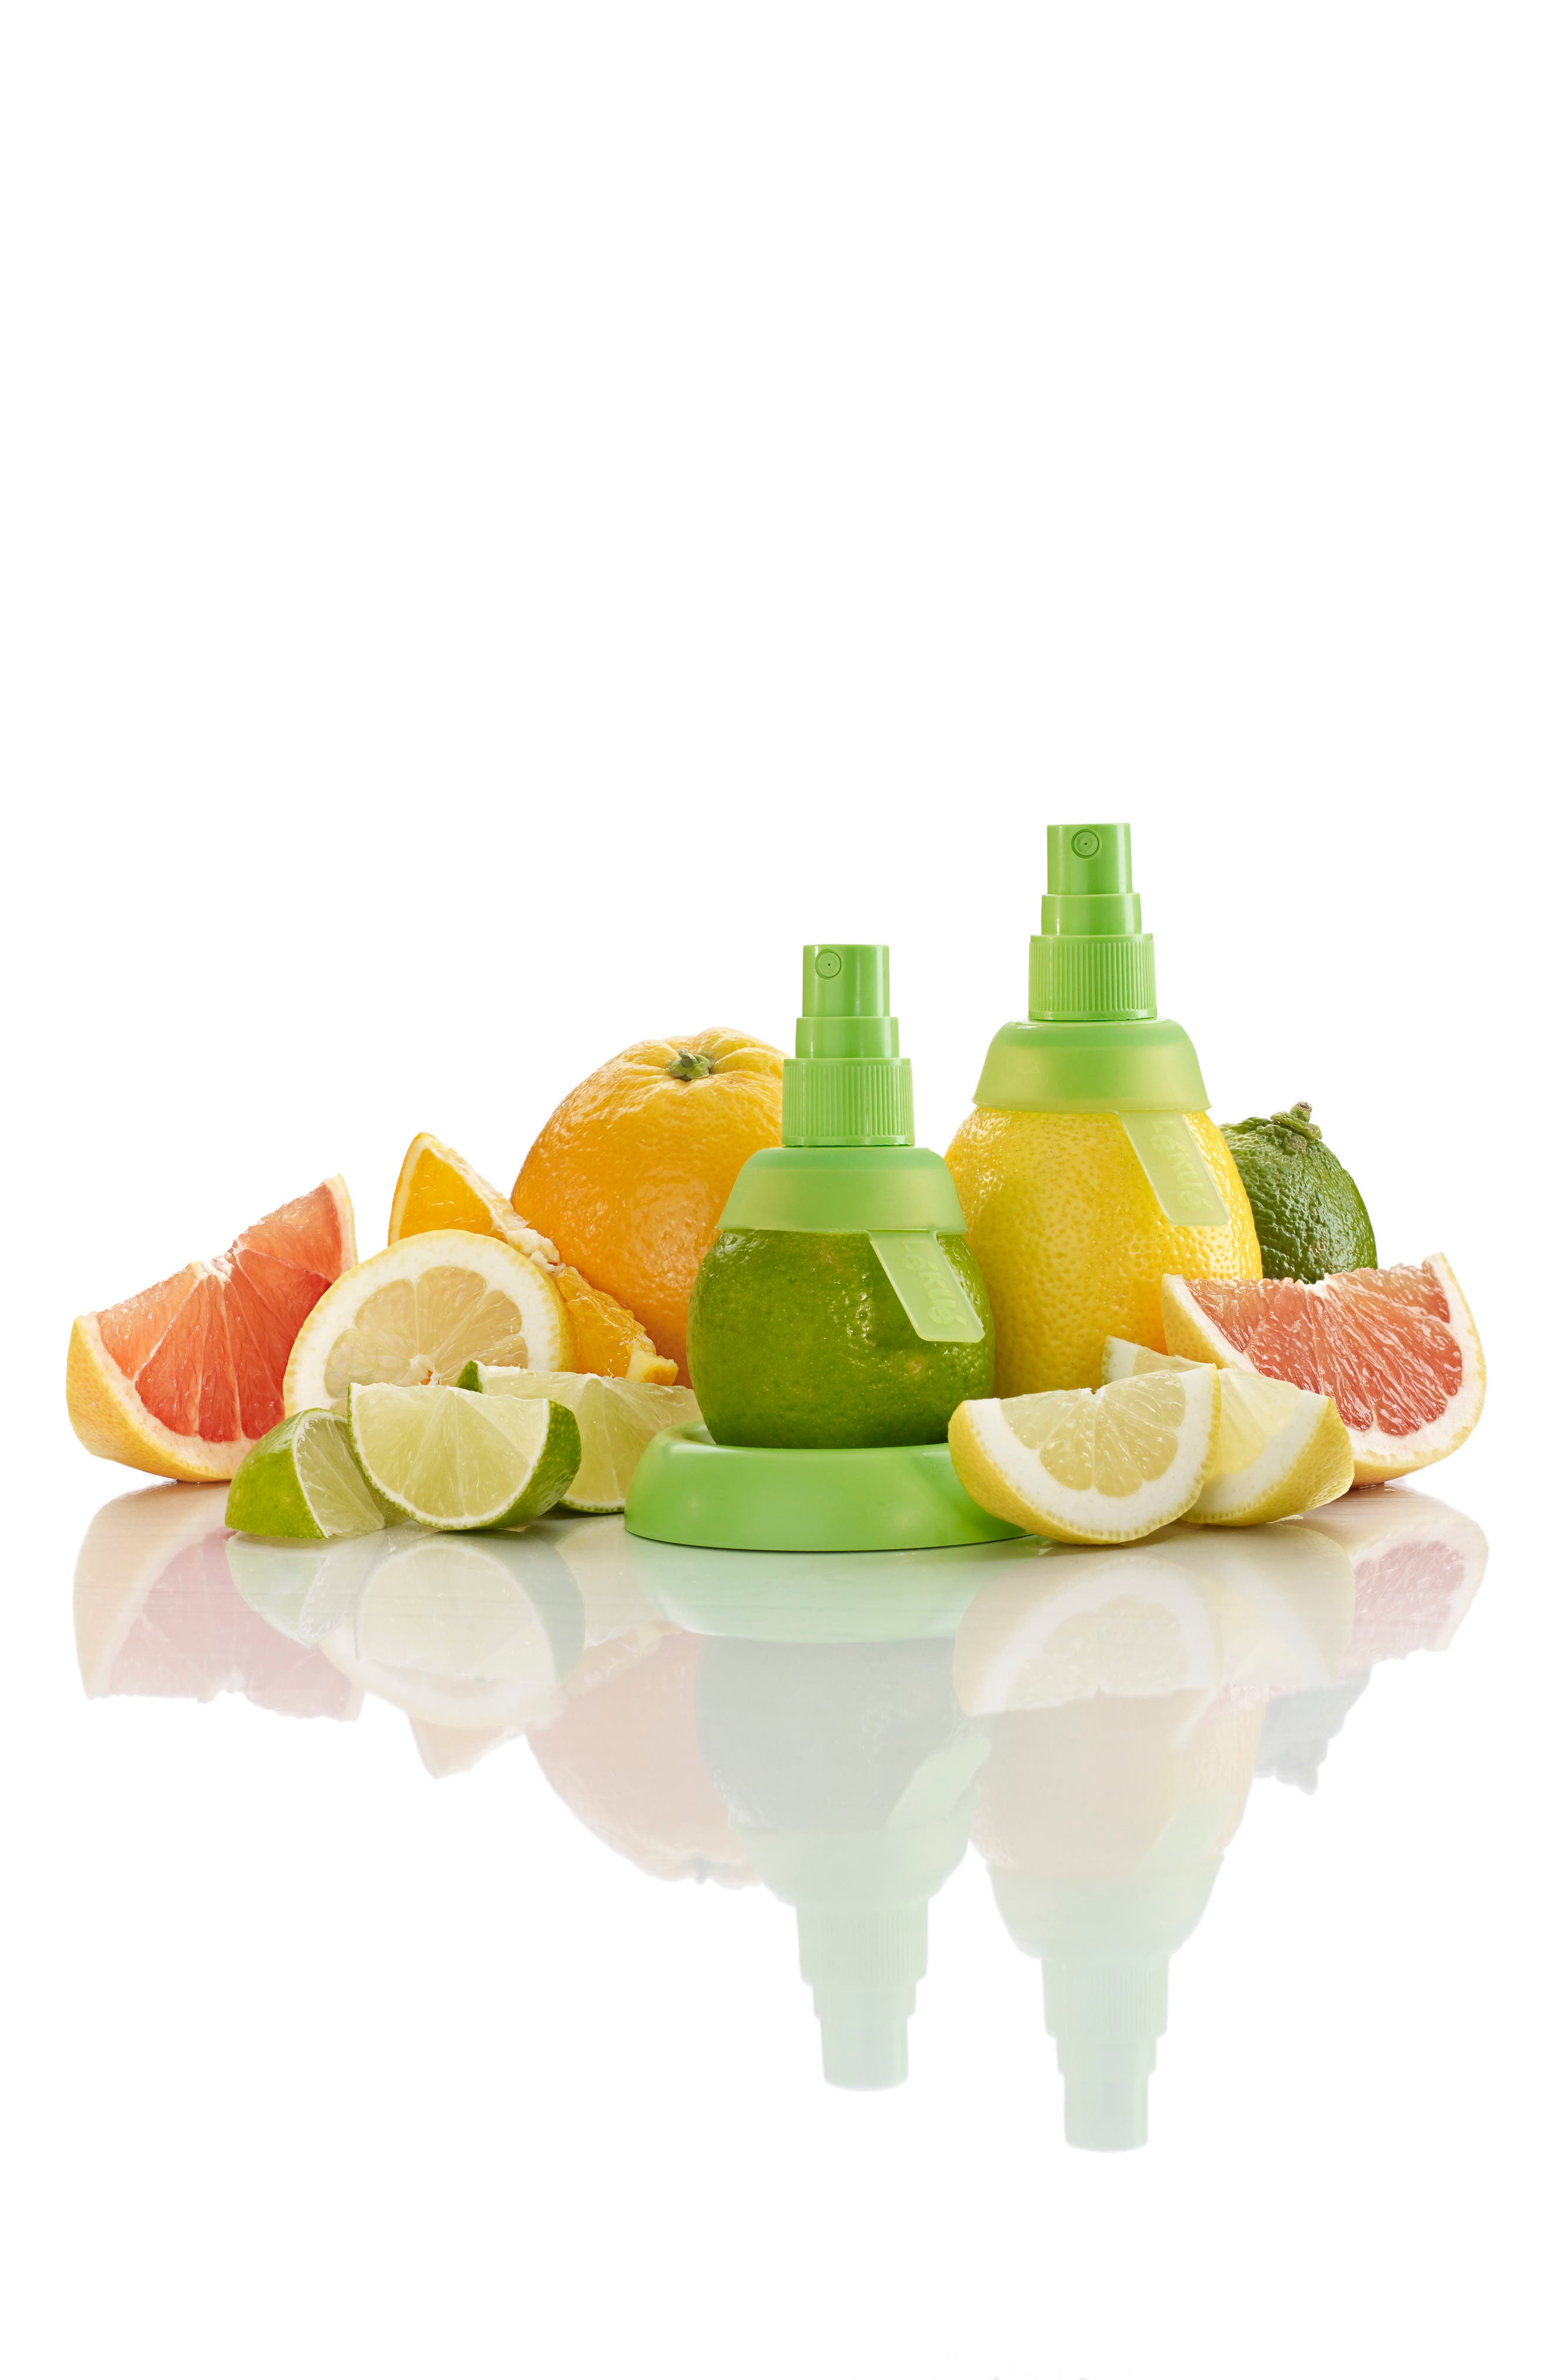 EAN 8420460000099 product image for Lekue Citrus Juice Sprayer Set in Green at Nordstrom | upcitemdb.com